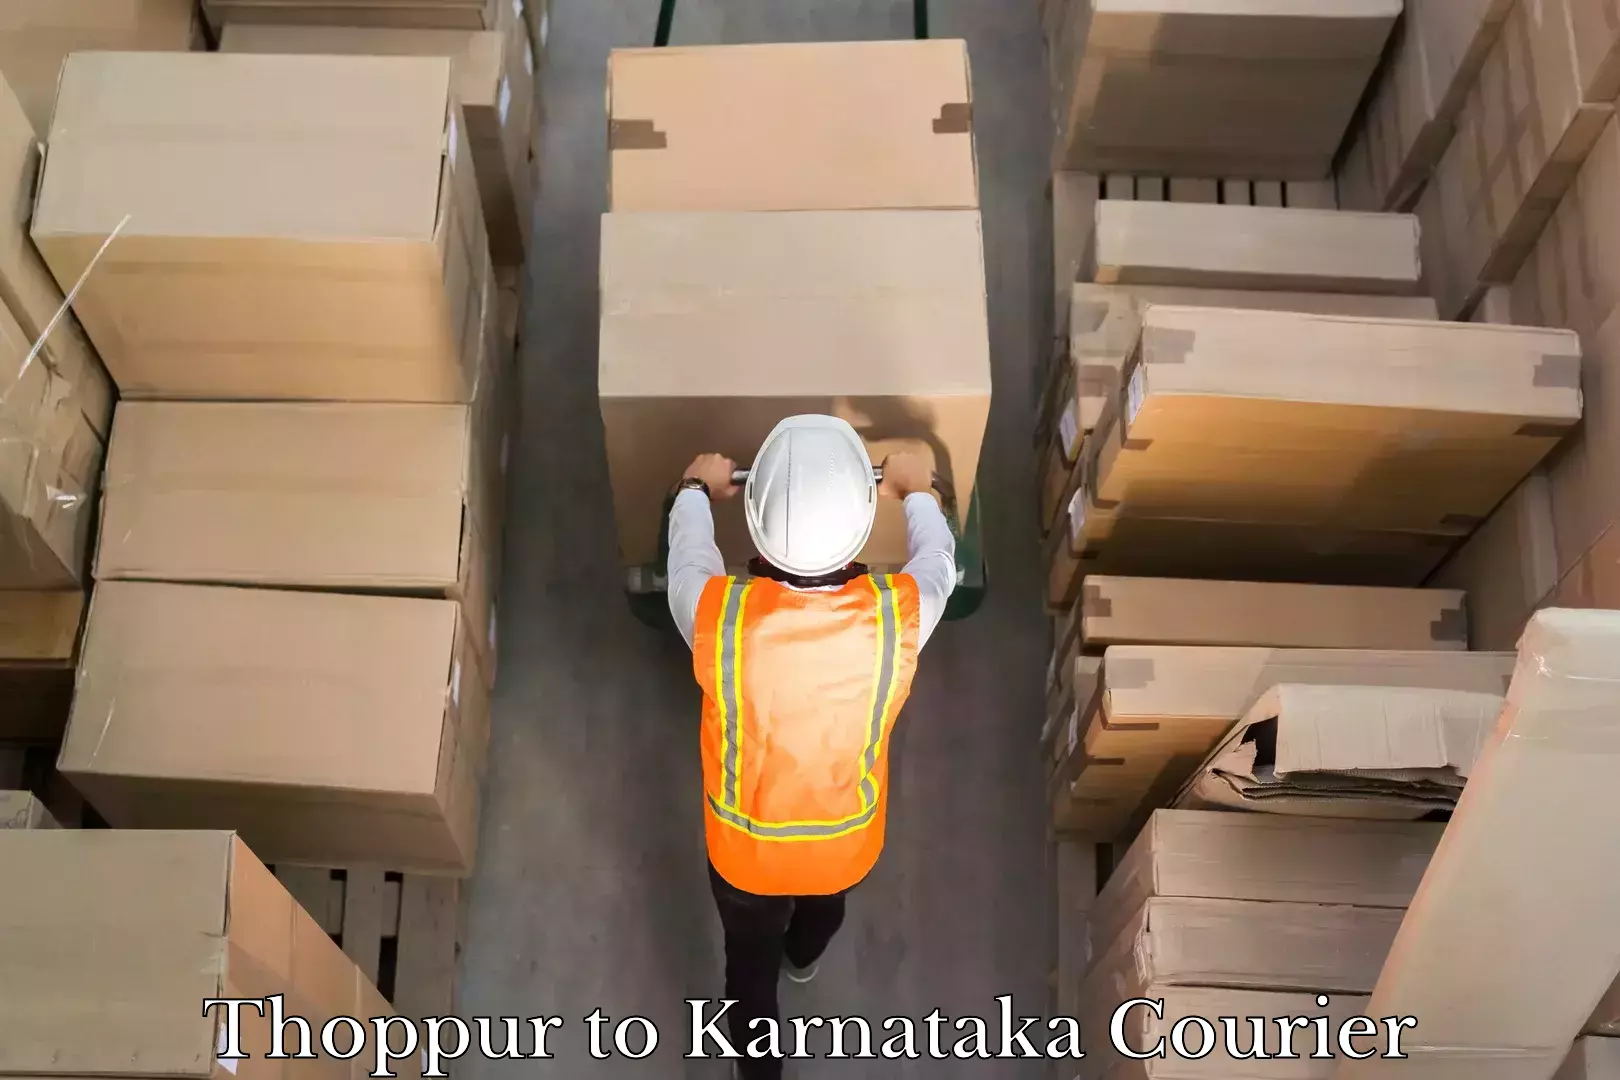 Subscription-based courier Thoppur to Karnataka